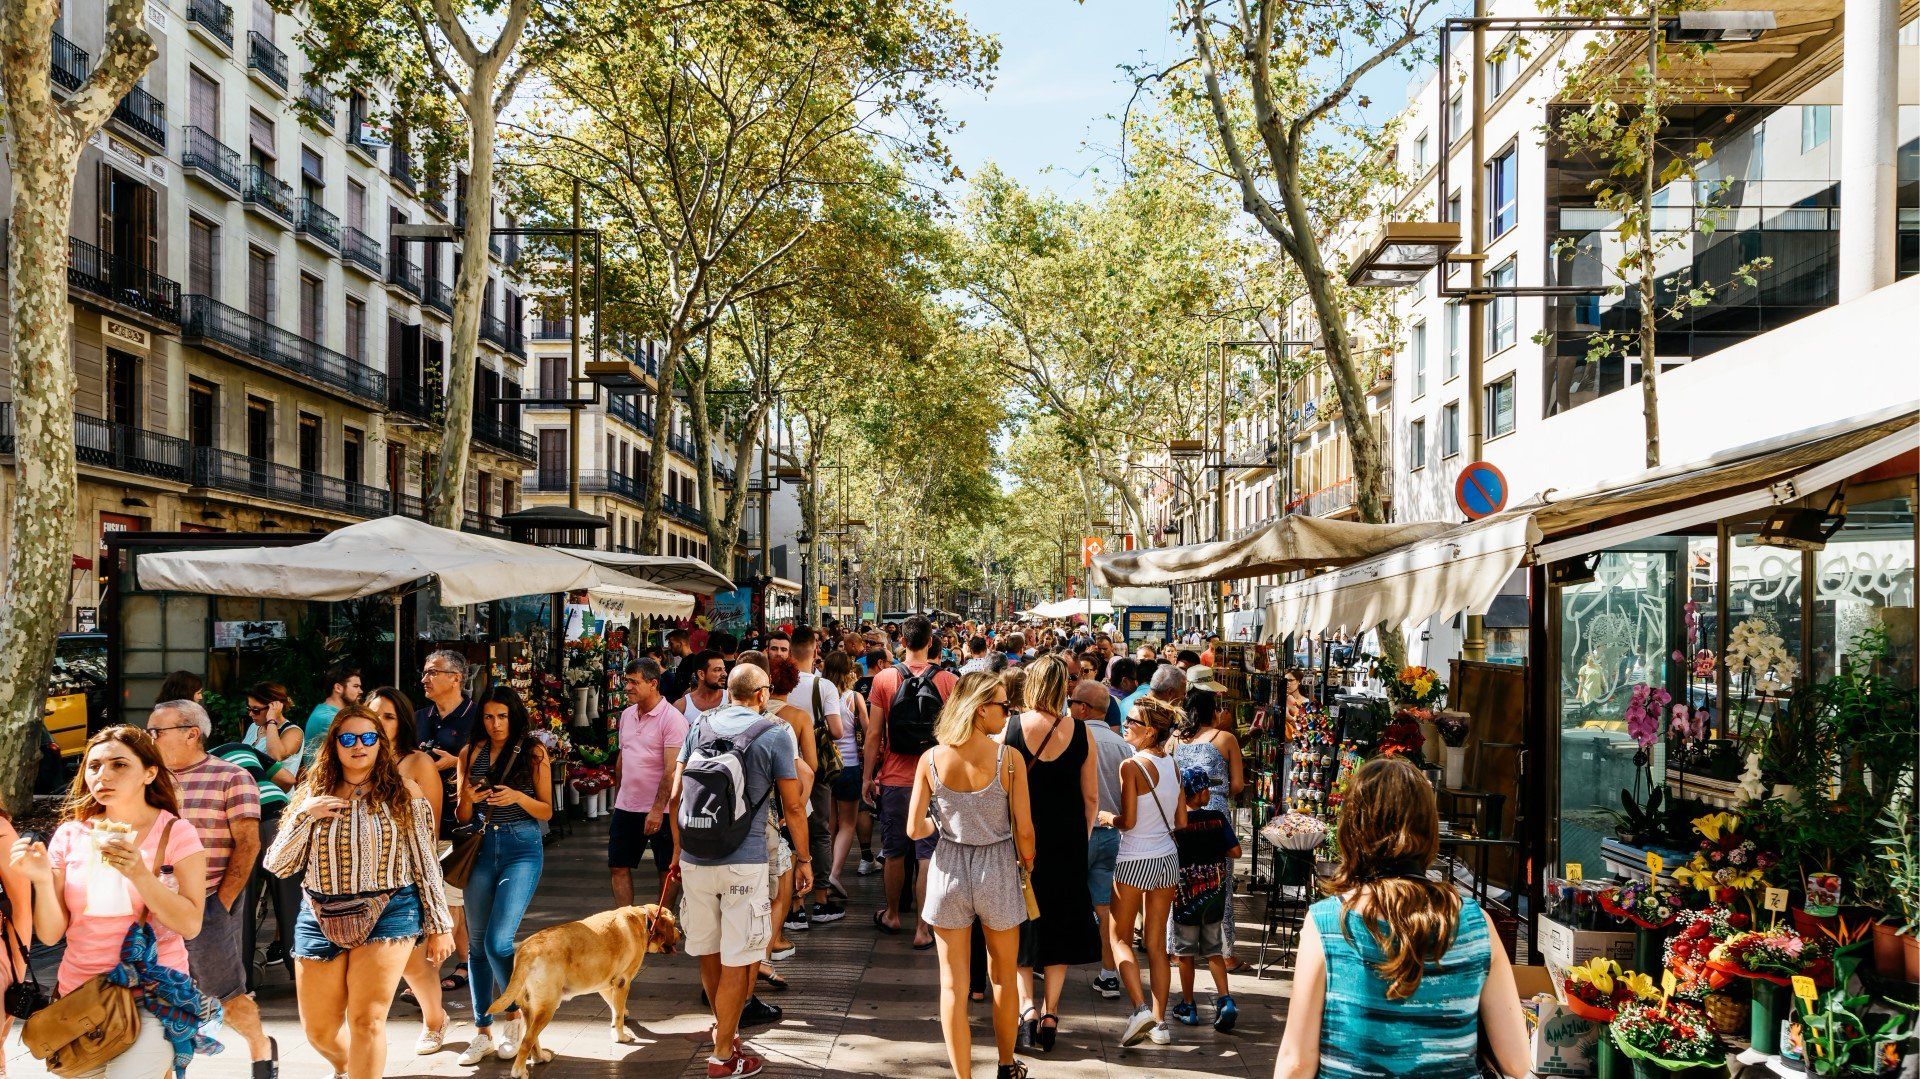 La Rambla boulevard, the most famous in Barcelona